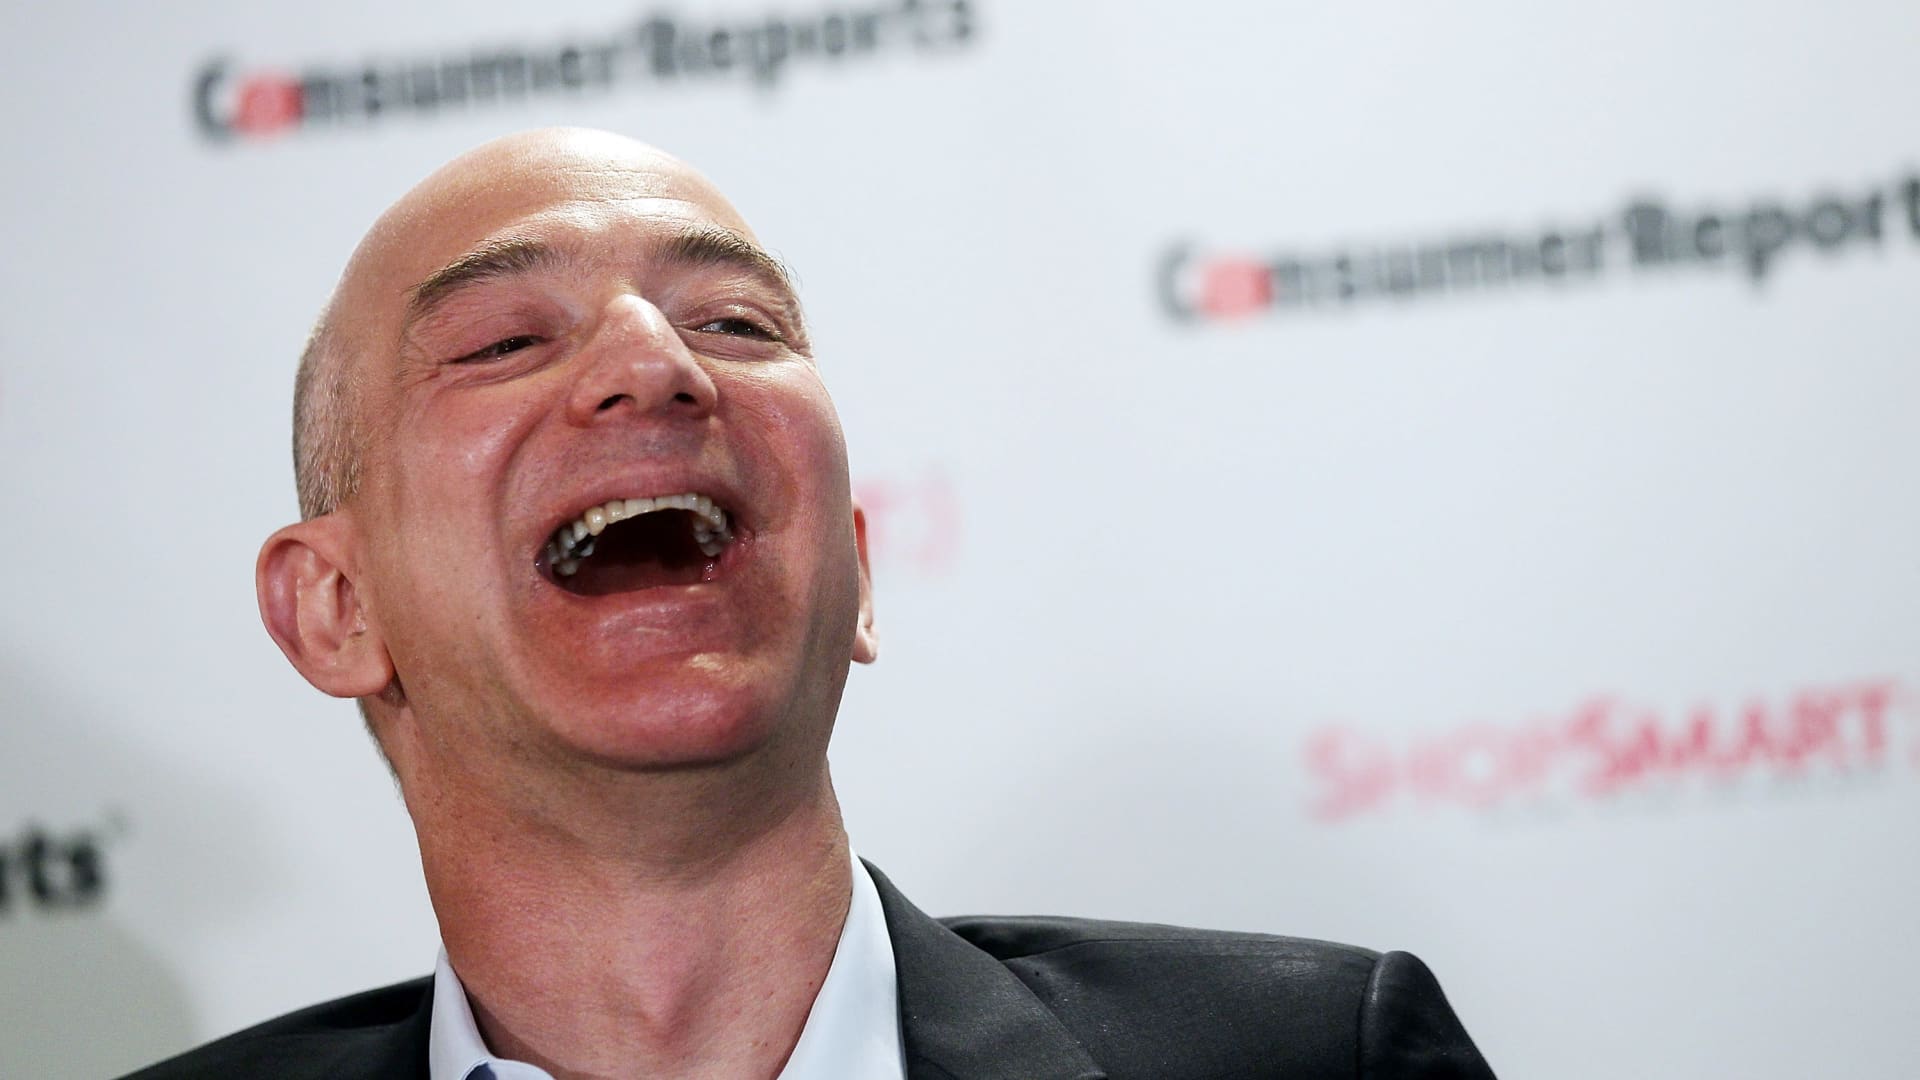 Amazon jumps after smashing earnings